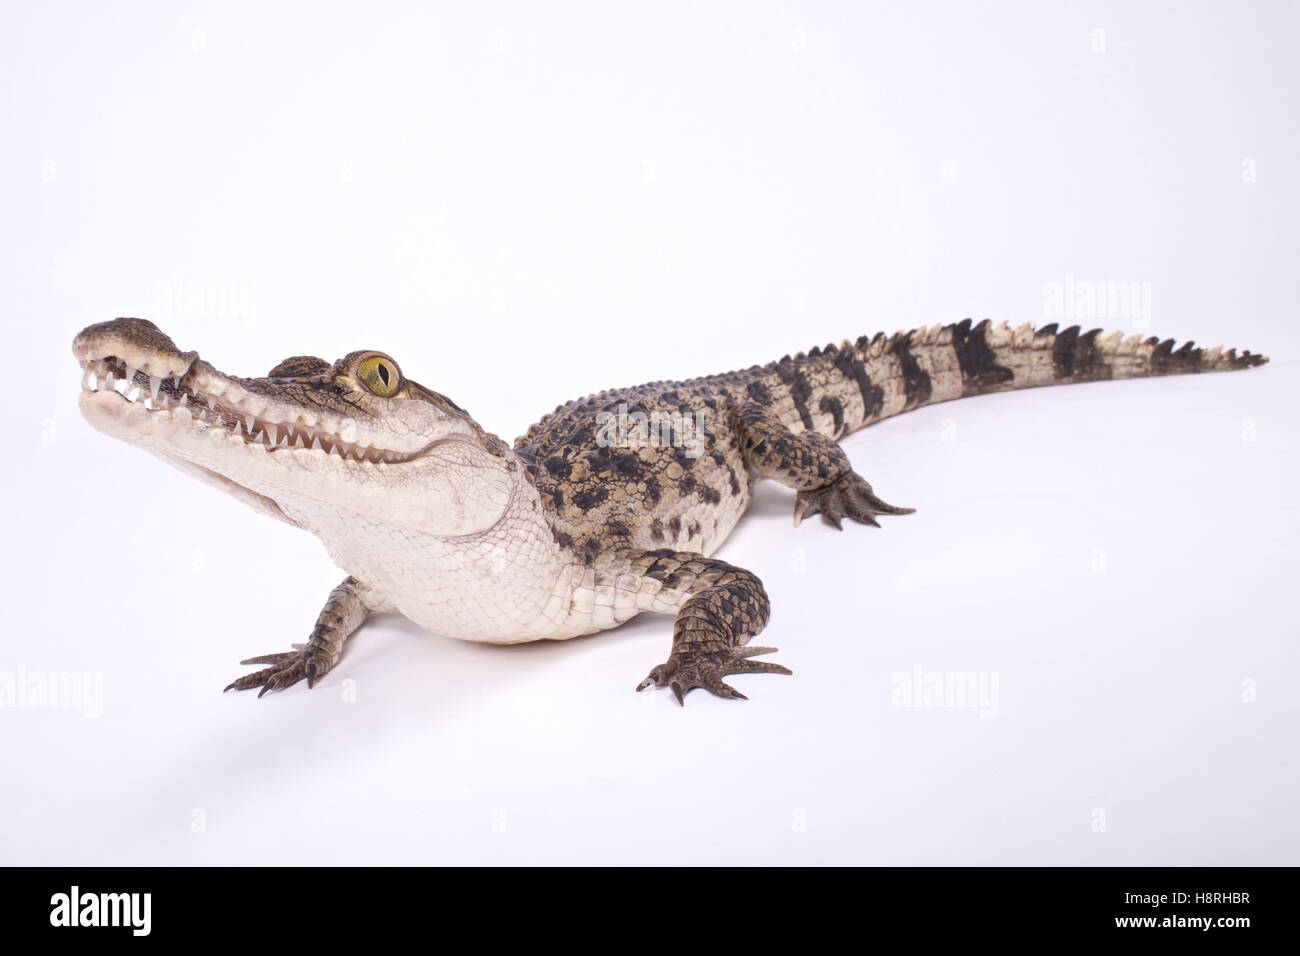 Crocodile Crocodylus mindorensis,Philippine Banque D'Images